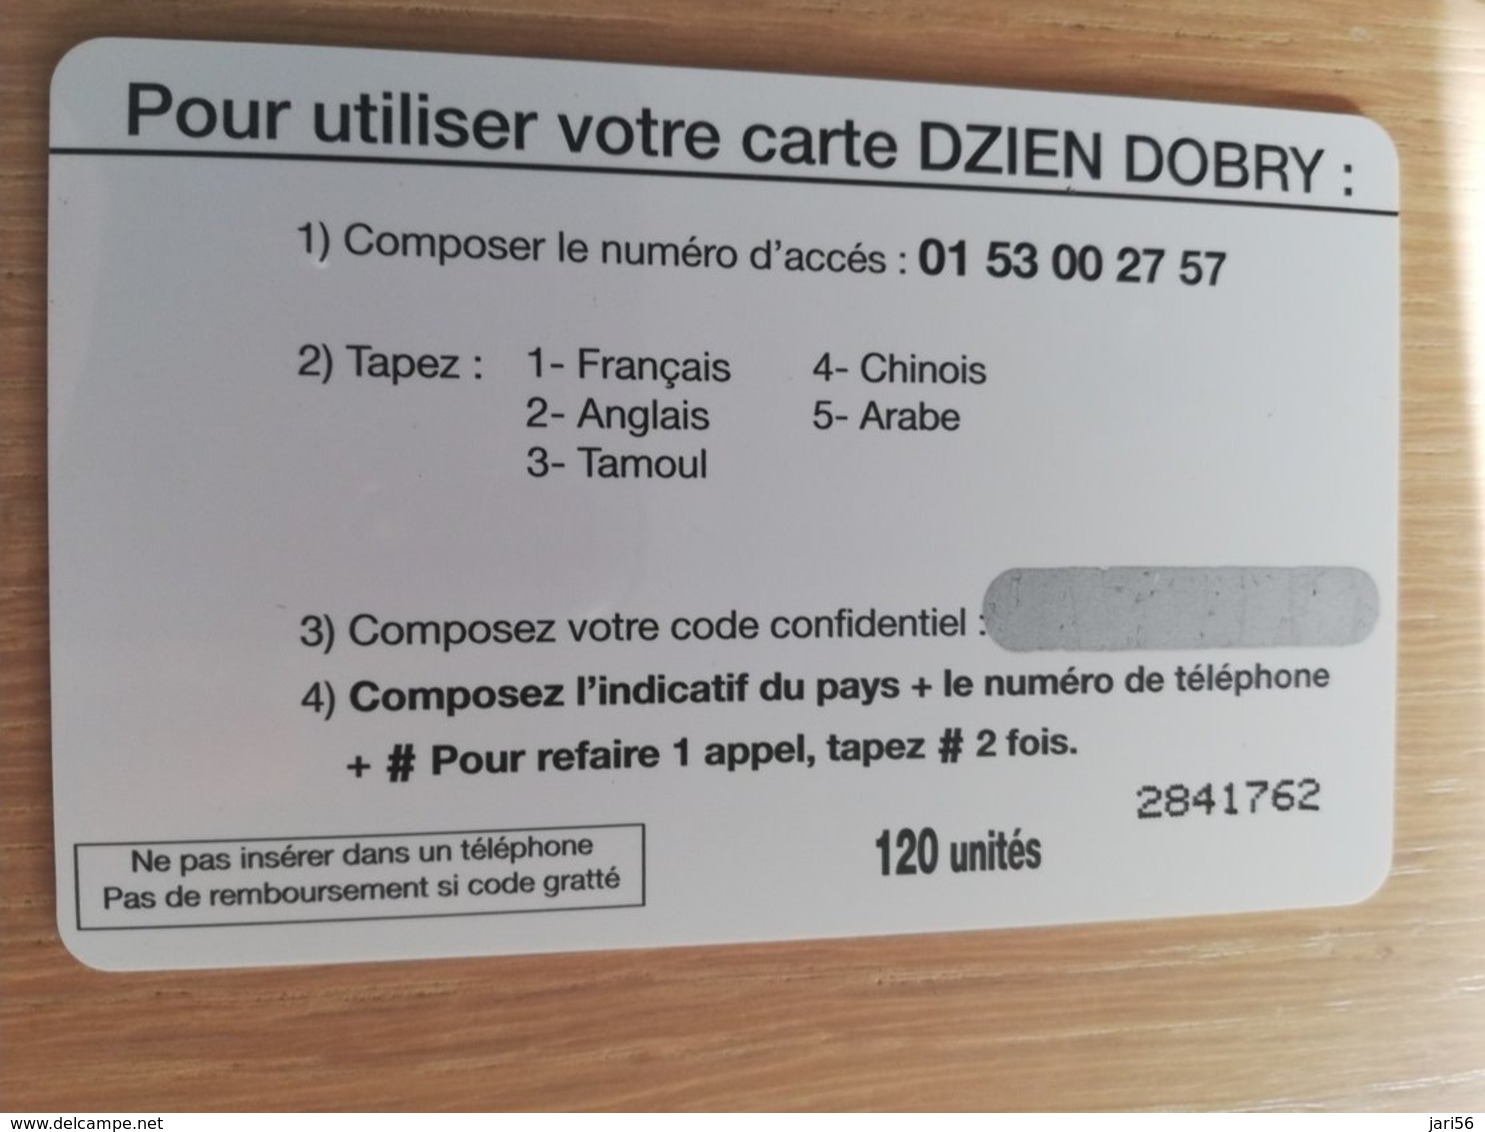 FRANCE/FRANKRIJK  DZIEN DORY PLANE  AUTOBUS  120 UNITES  PREPAID  MINT     ** 1514** - Per Cellulari (telefonini/schede SIM)